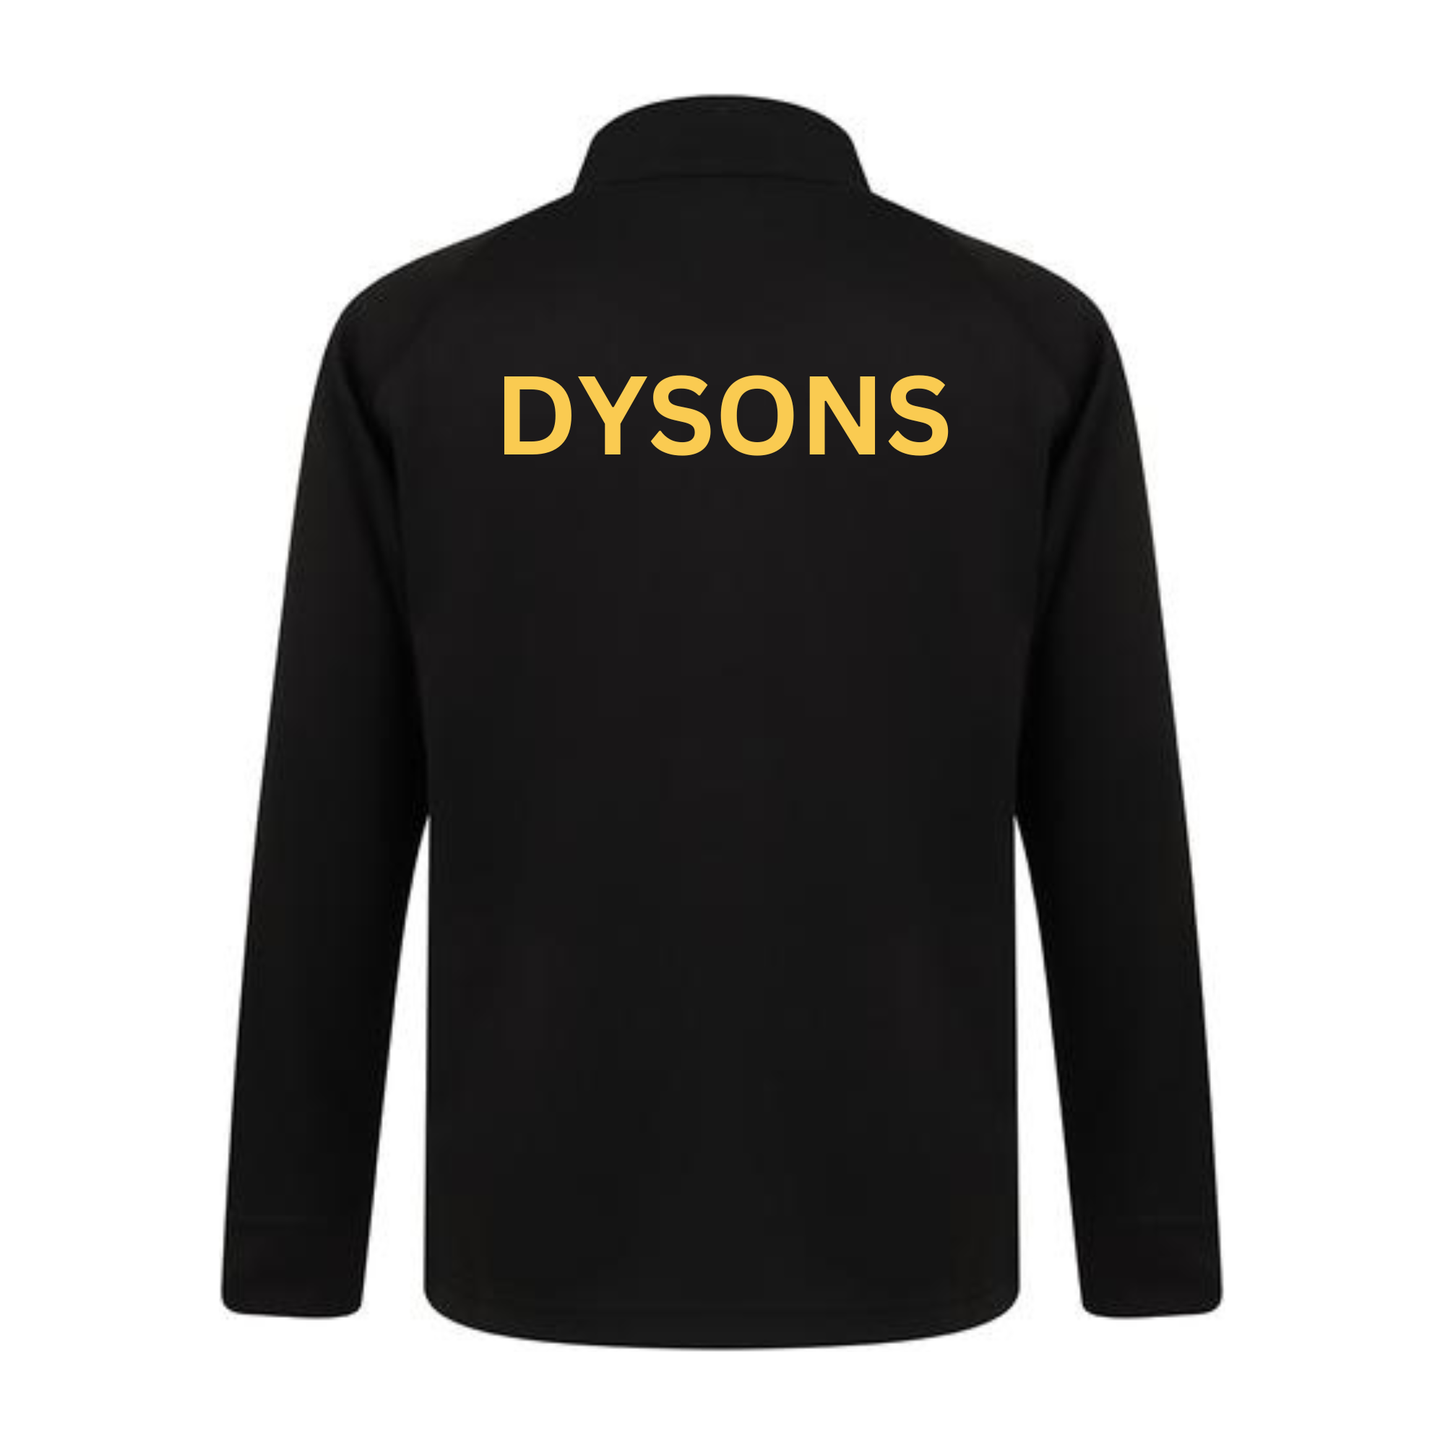 Dysons Team Wear Tracksuit Set Black